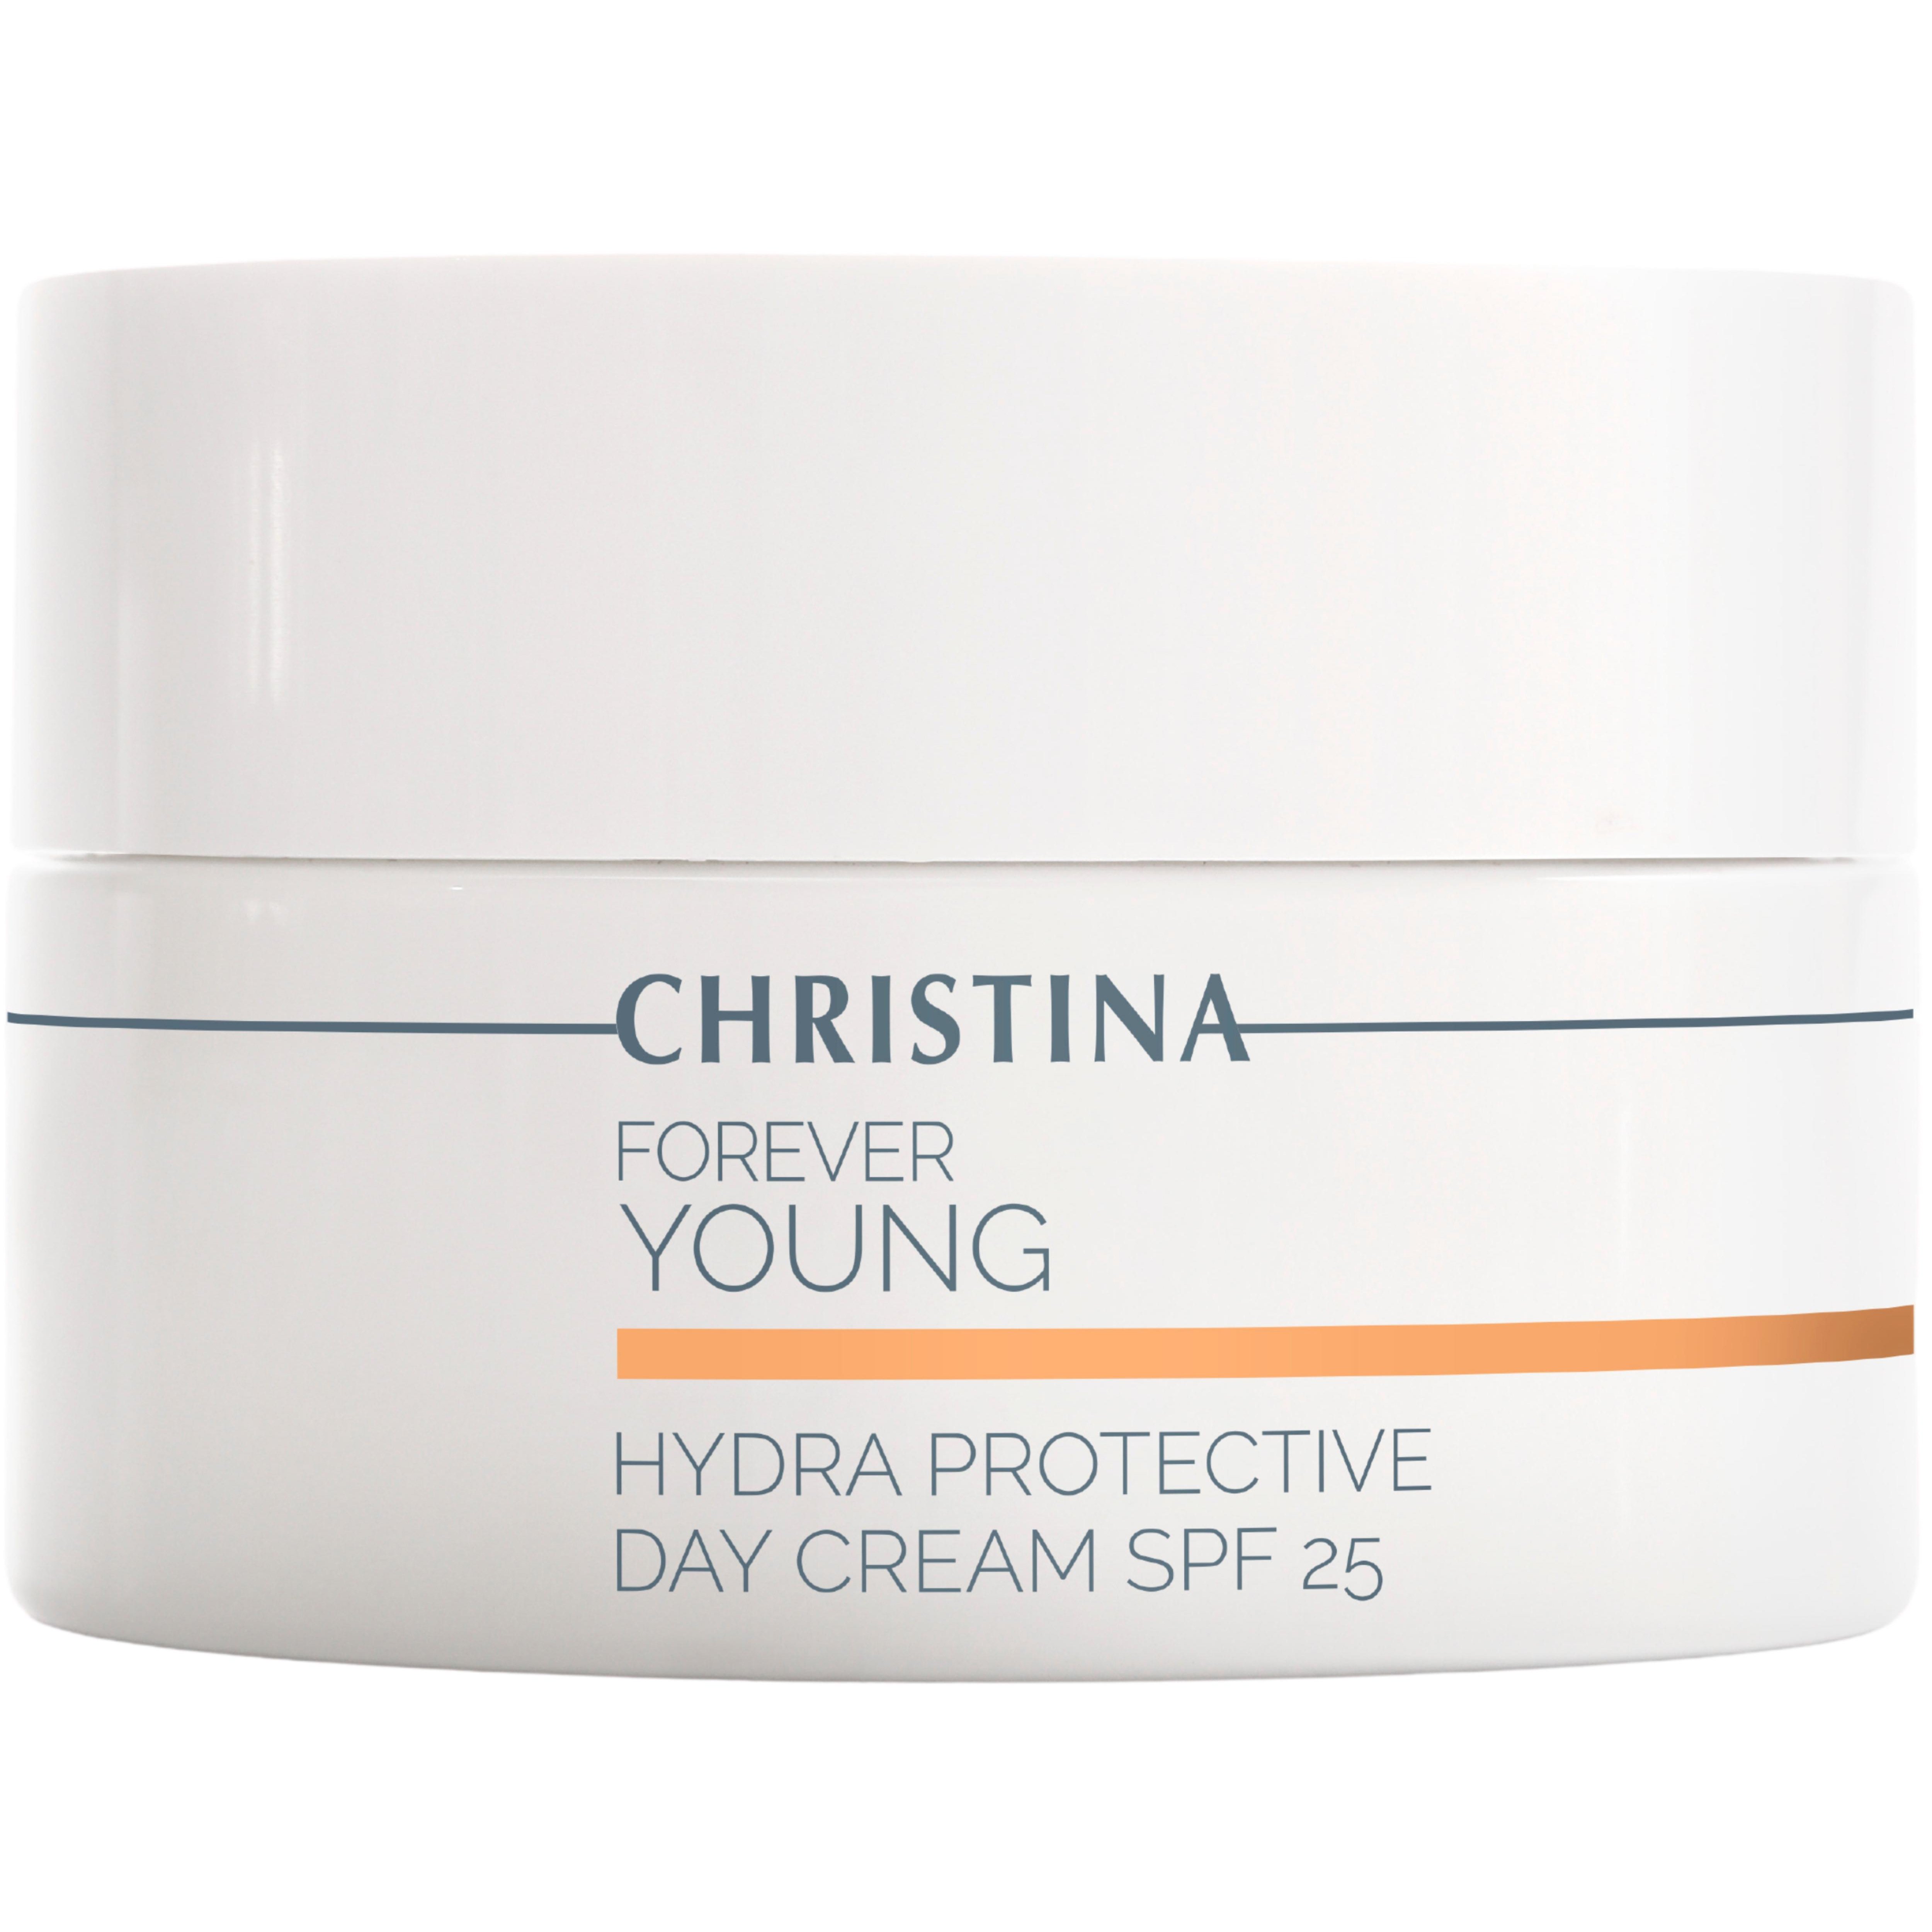 Денний гідрозахисний крем Christina Forever Young 8 Hydra Protective Day Cream SPF 25, 50 мл - фото 1